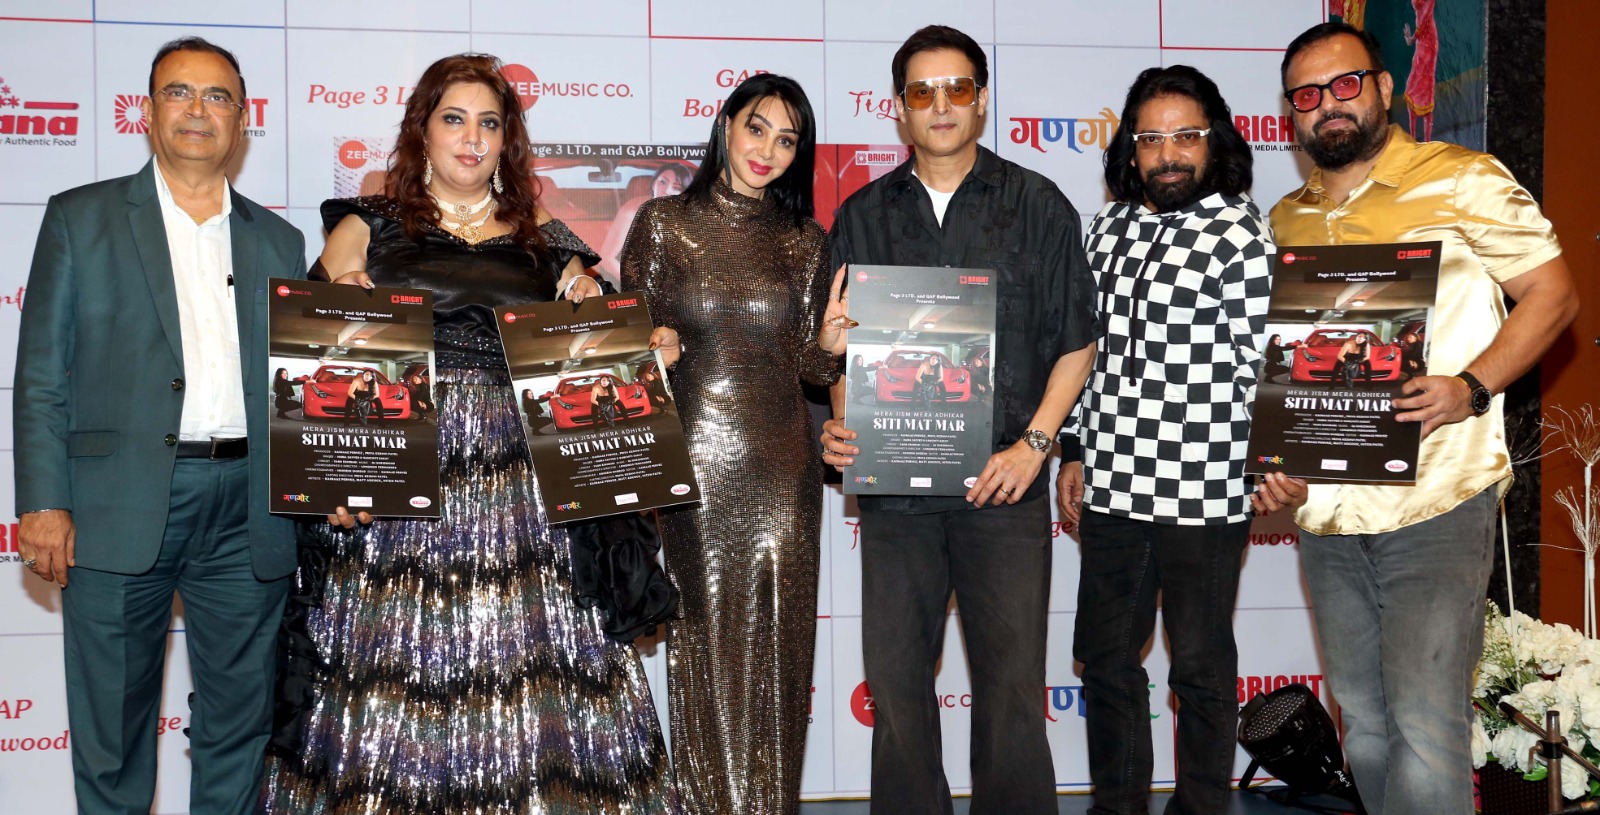 Kainaaz Pervez launches ‘Siti Mat Mar’ amidst celebrities including Jimmy Shergill, Naved Jaffrey!